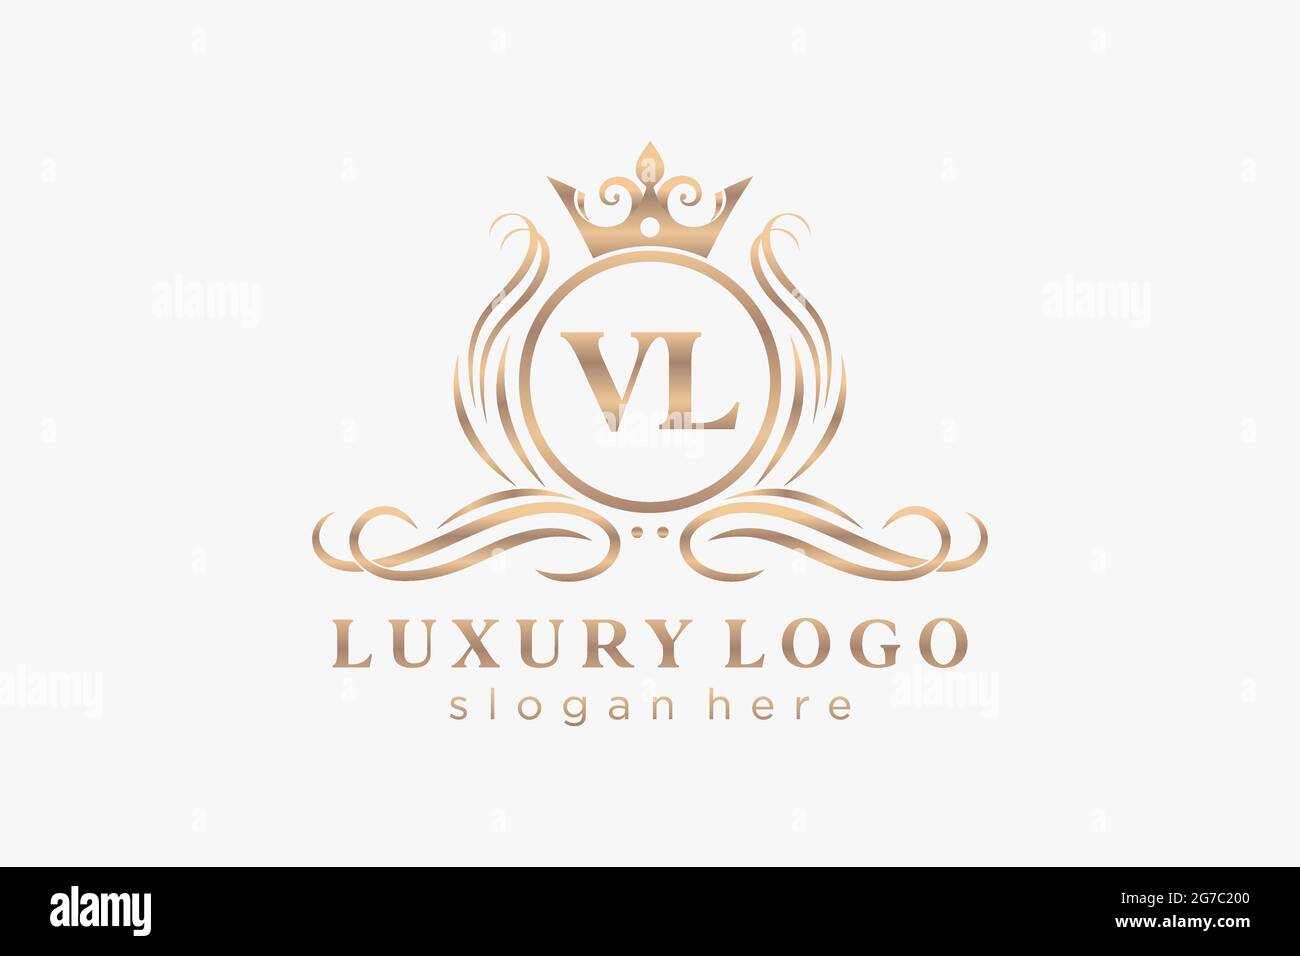 Premium Vector  Initial vl logo design, suitable for logo company